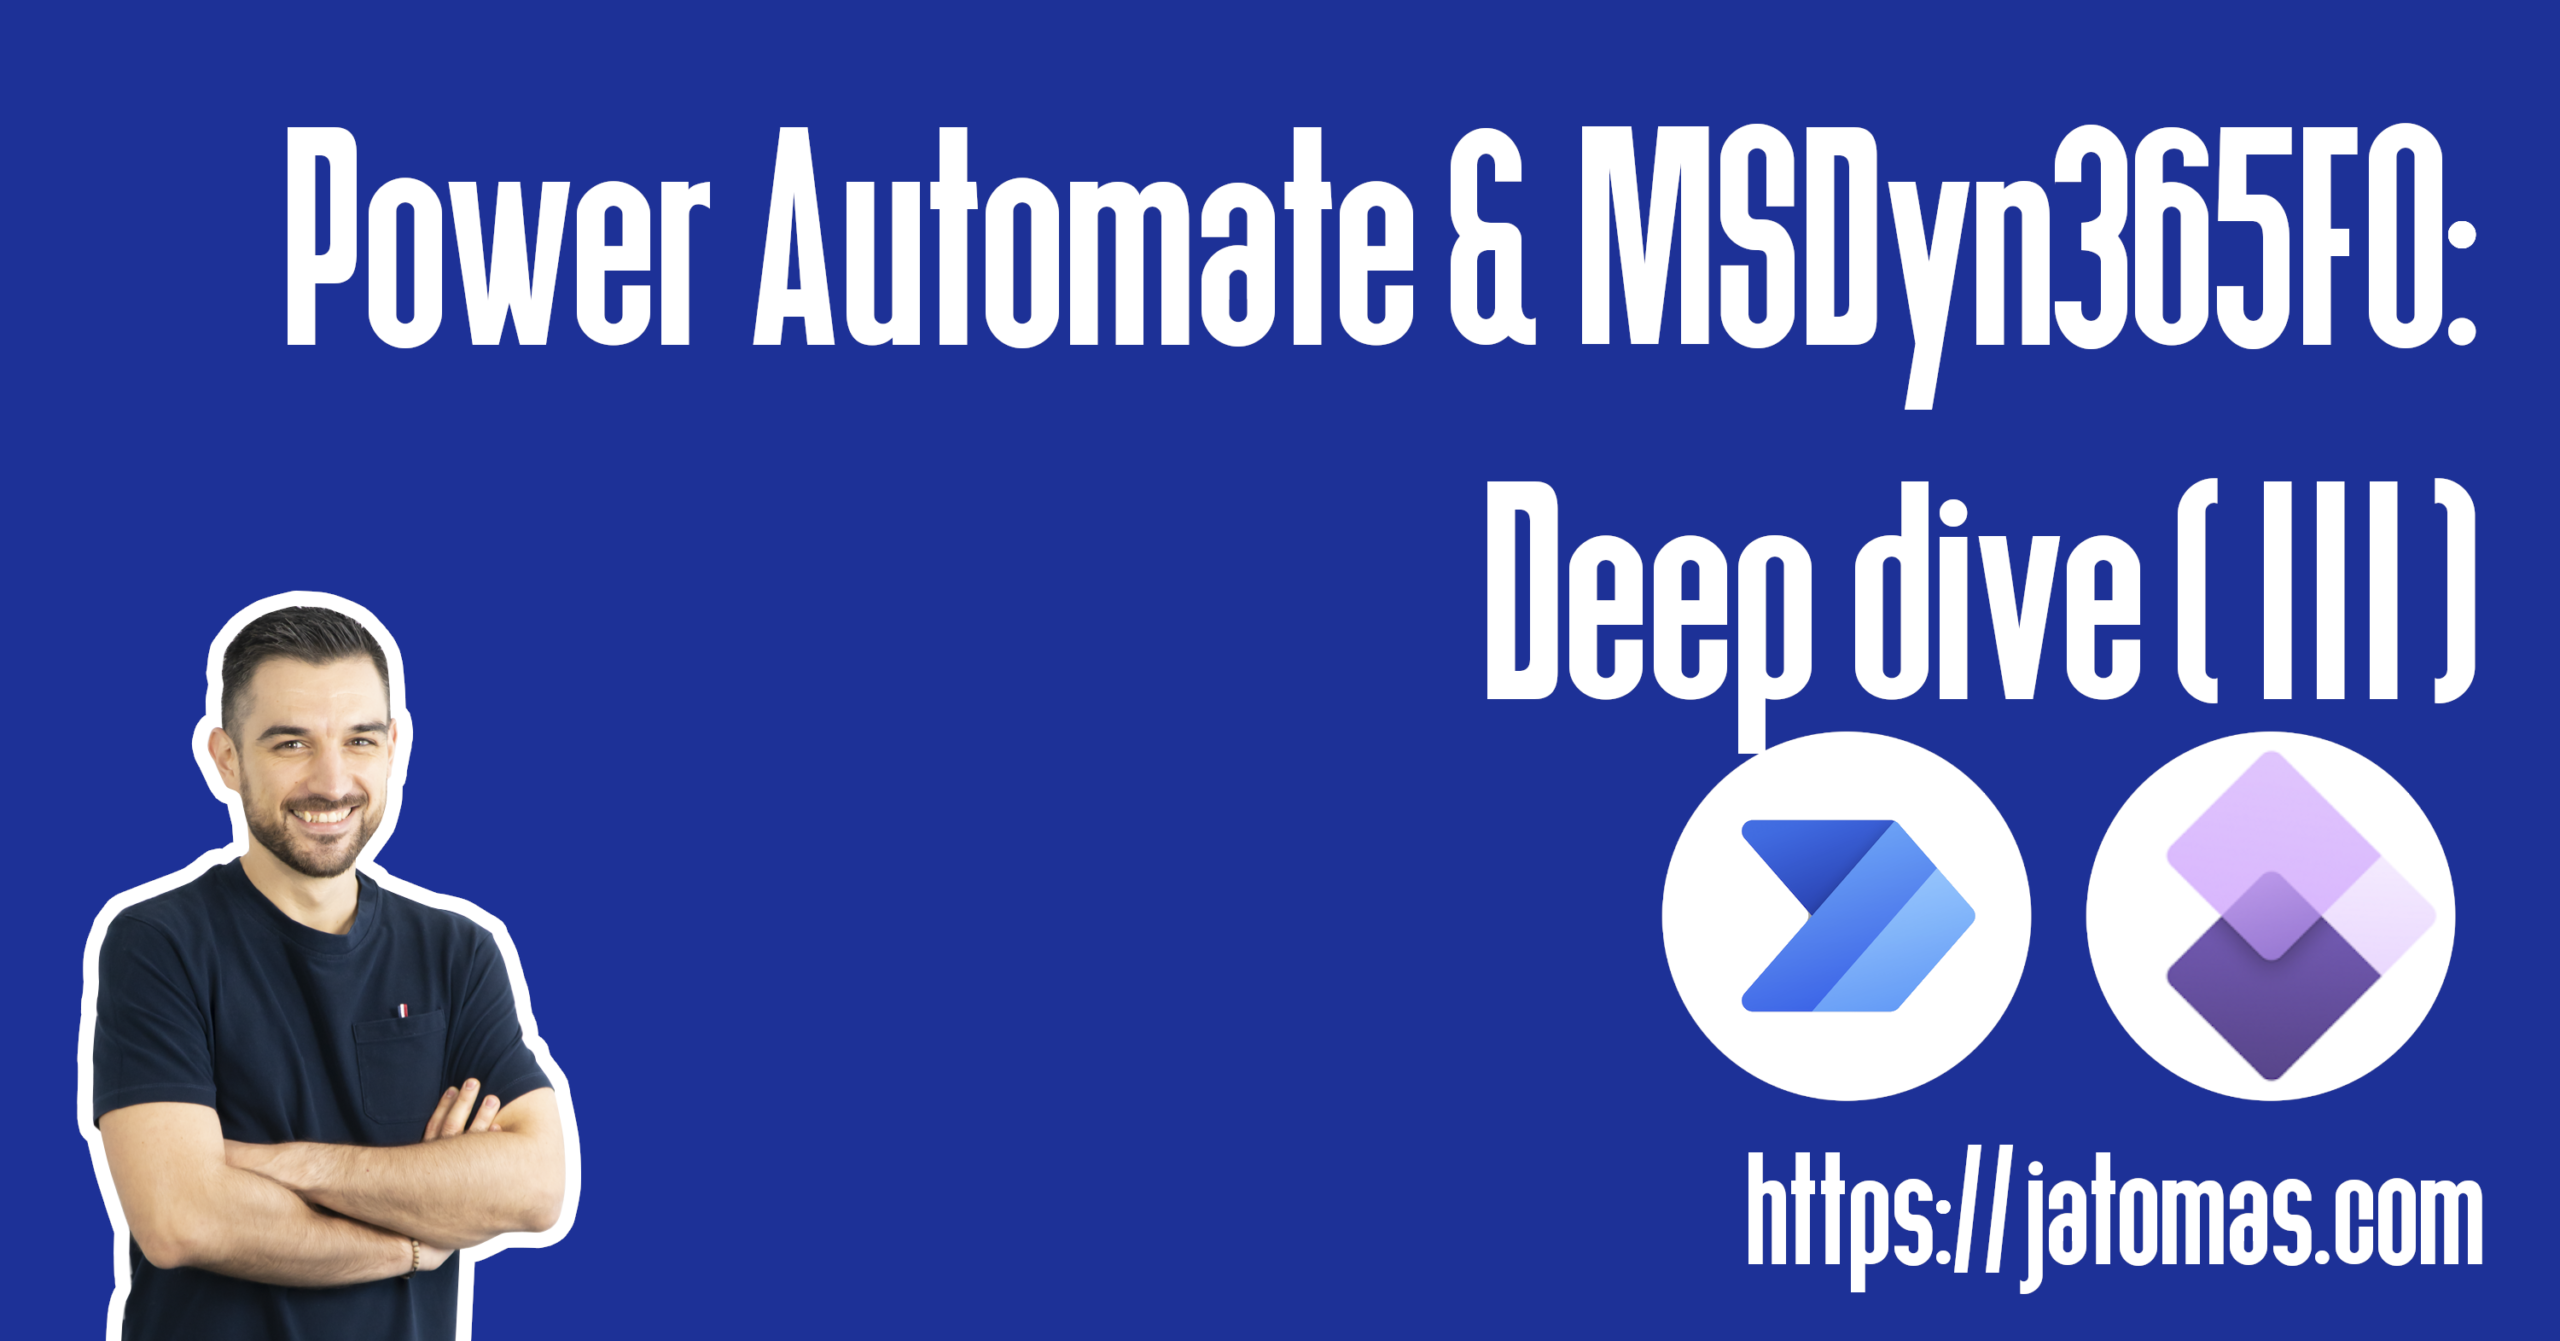 Power Automate & MSDyn365FO: Deep dive (III)